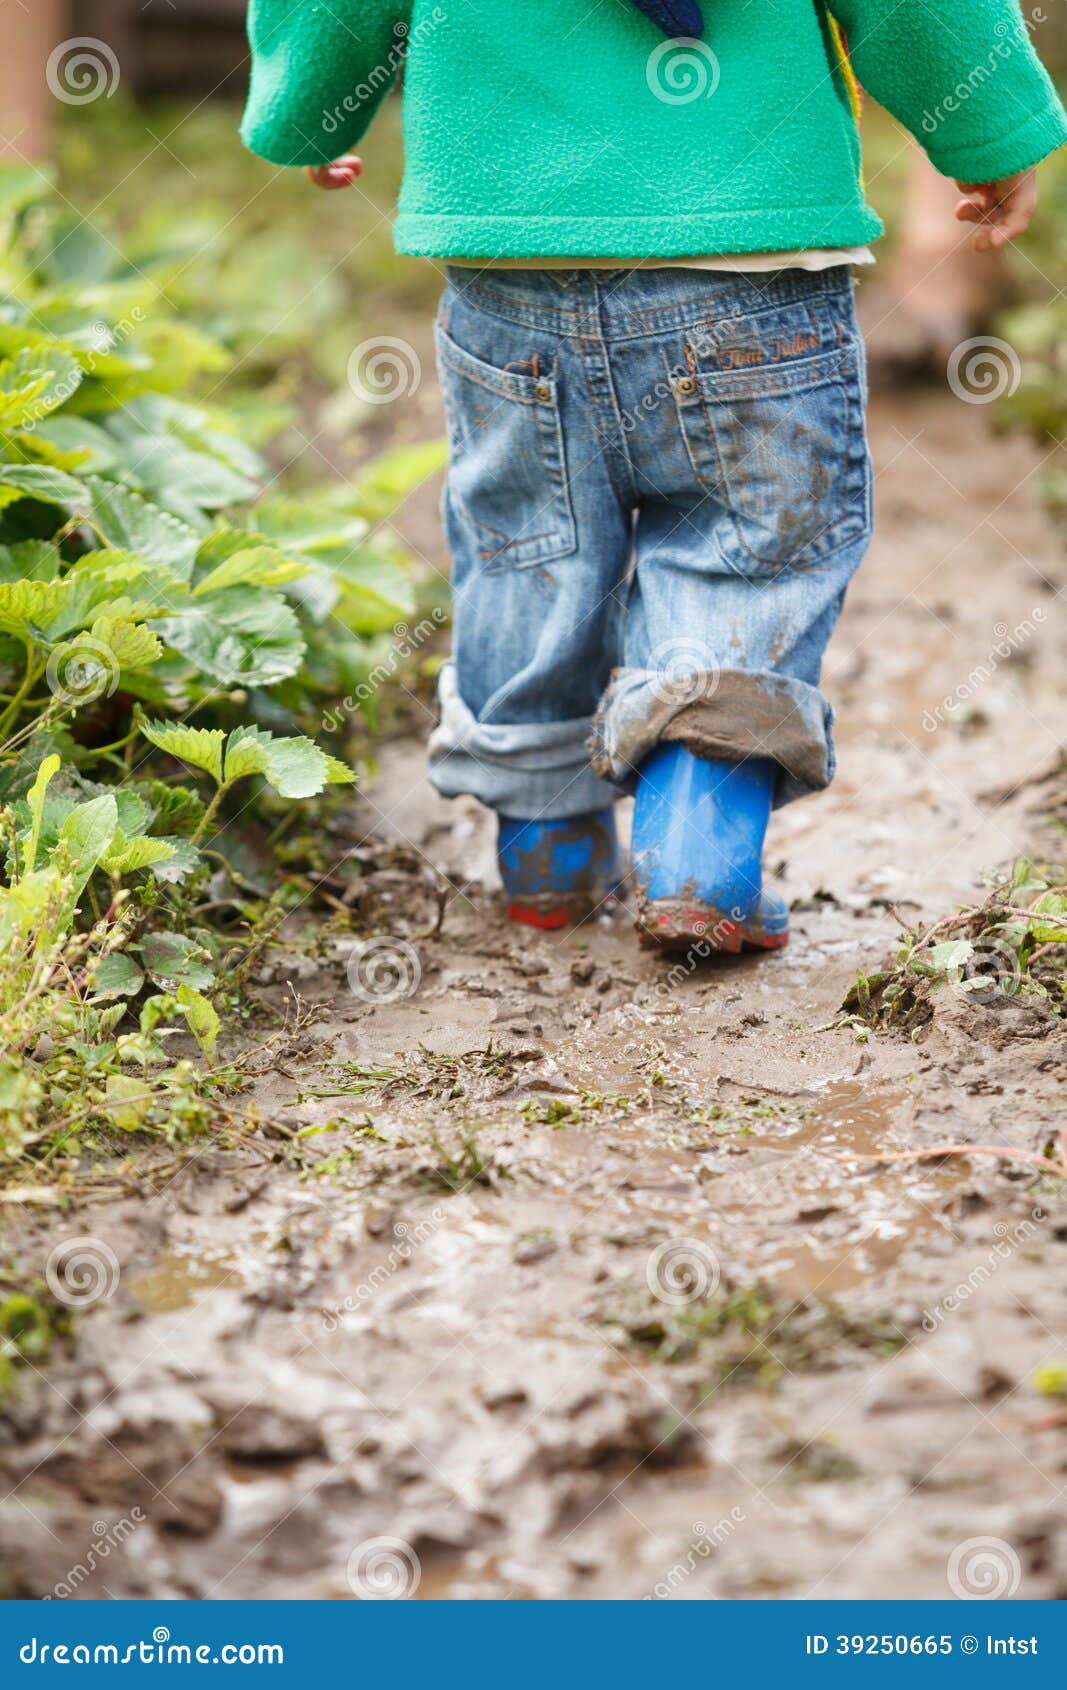 boy palaying in mud